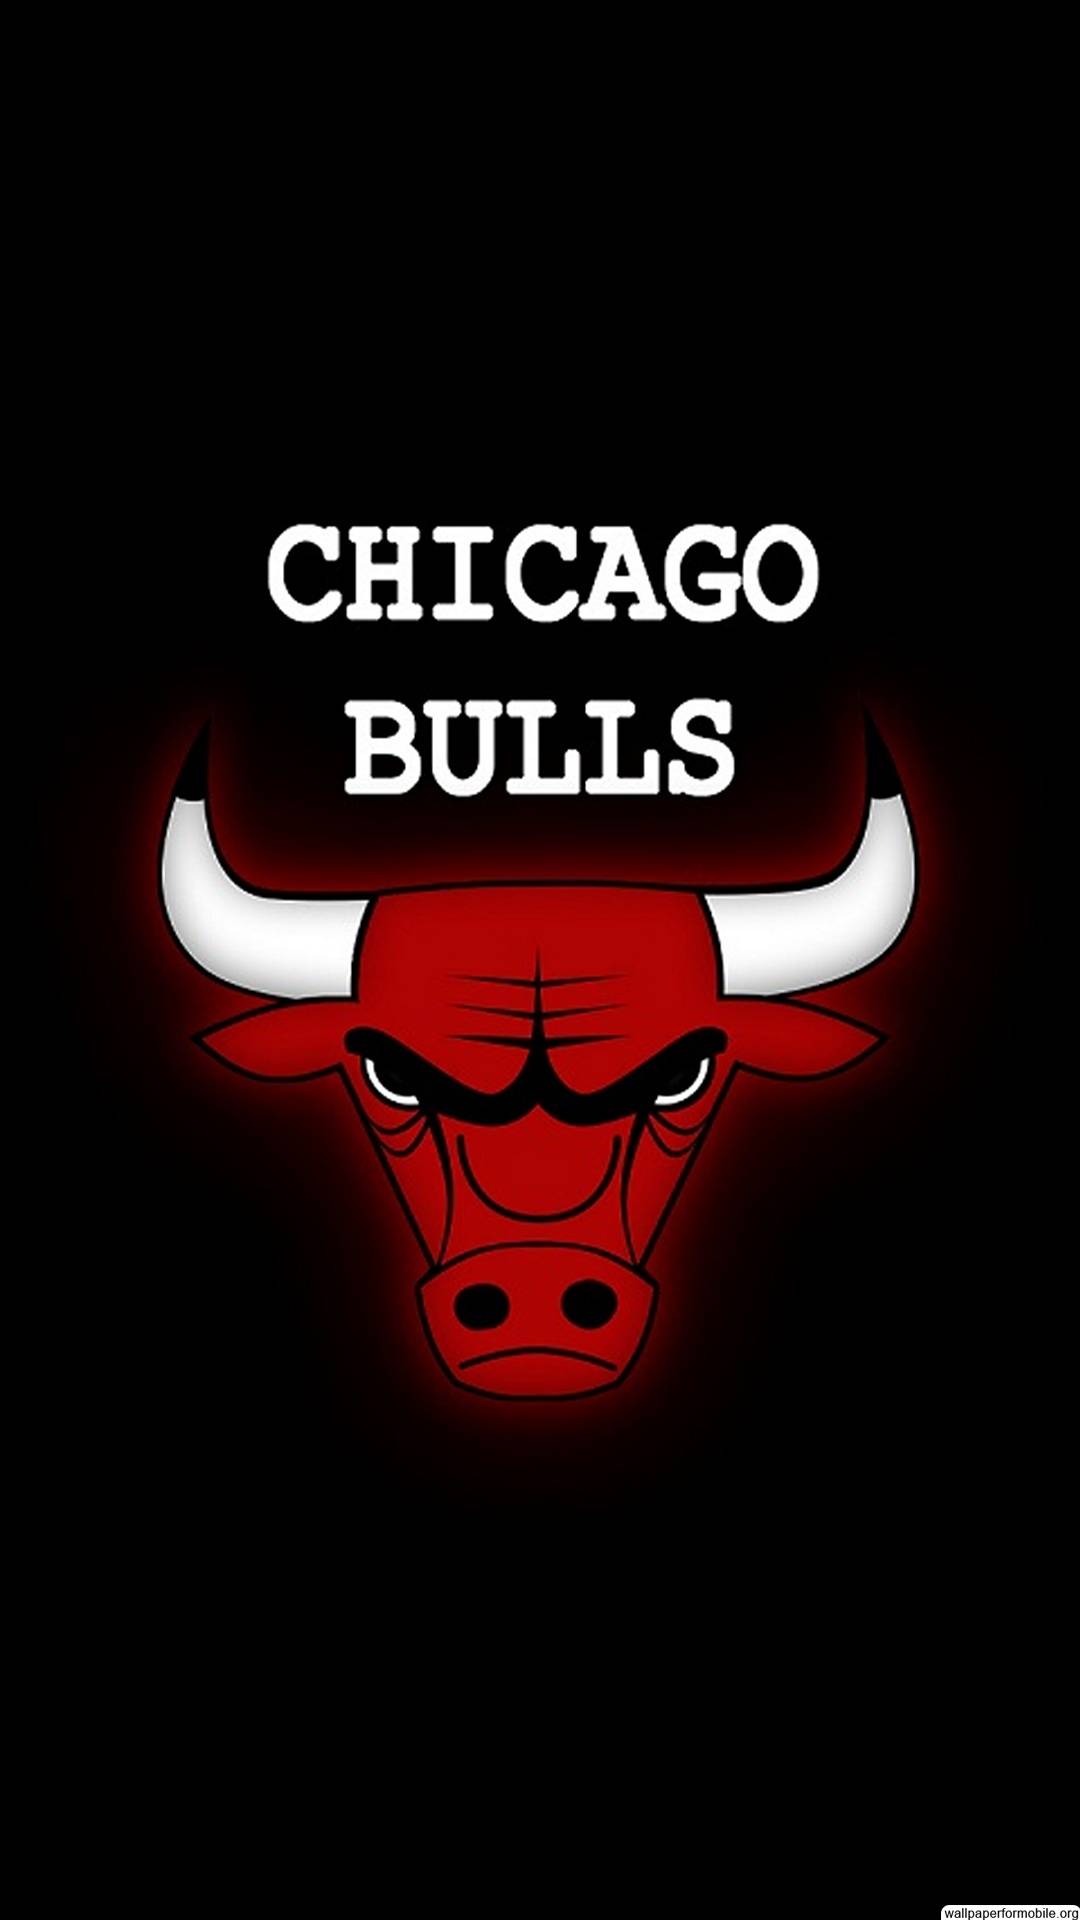 Chicago Bulls Wallpaper Free Download